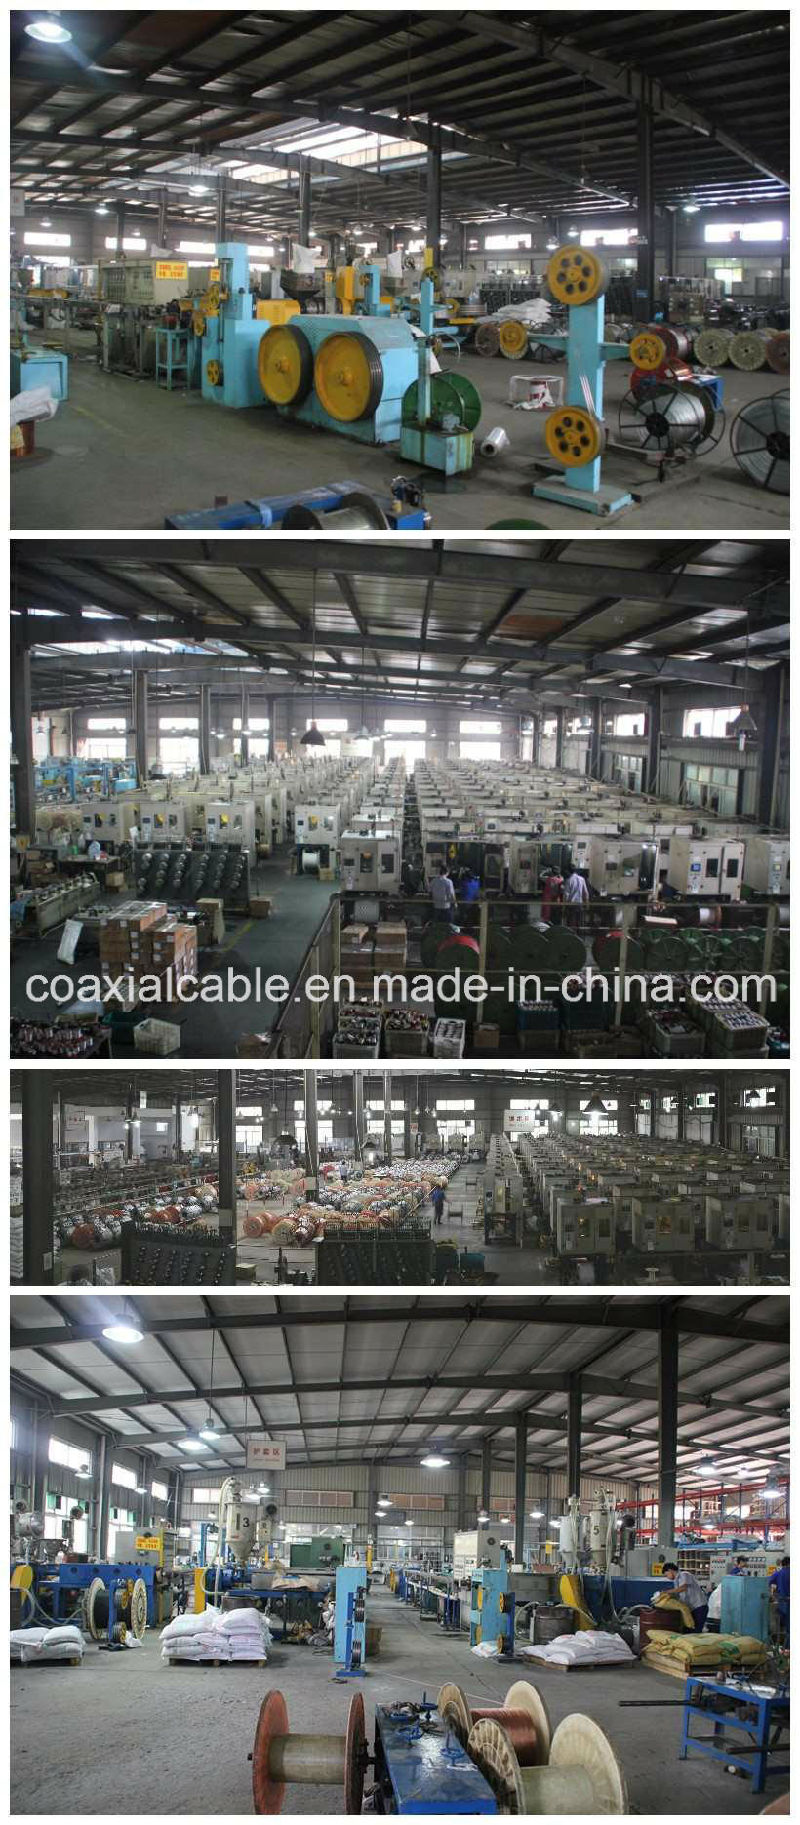 China Hangzhou Rg59 Coaxial Cable Al Braiding CCS Cable